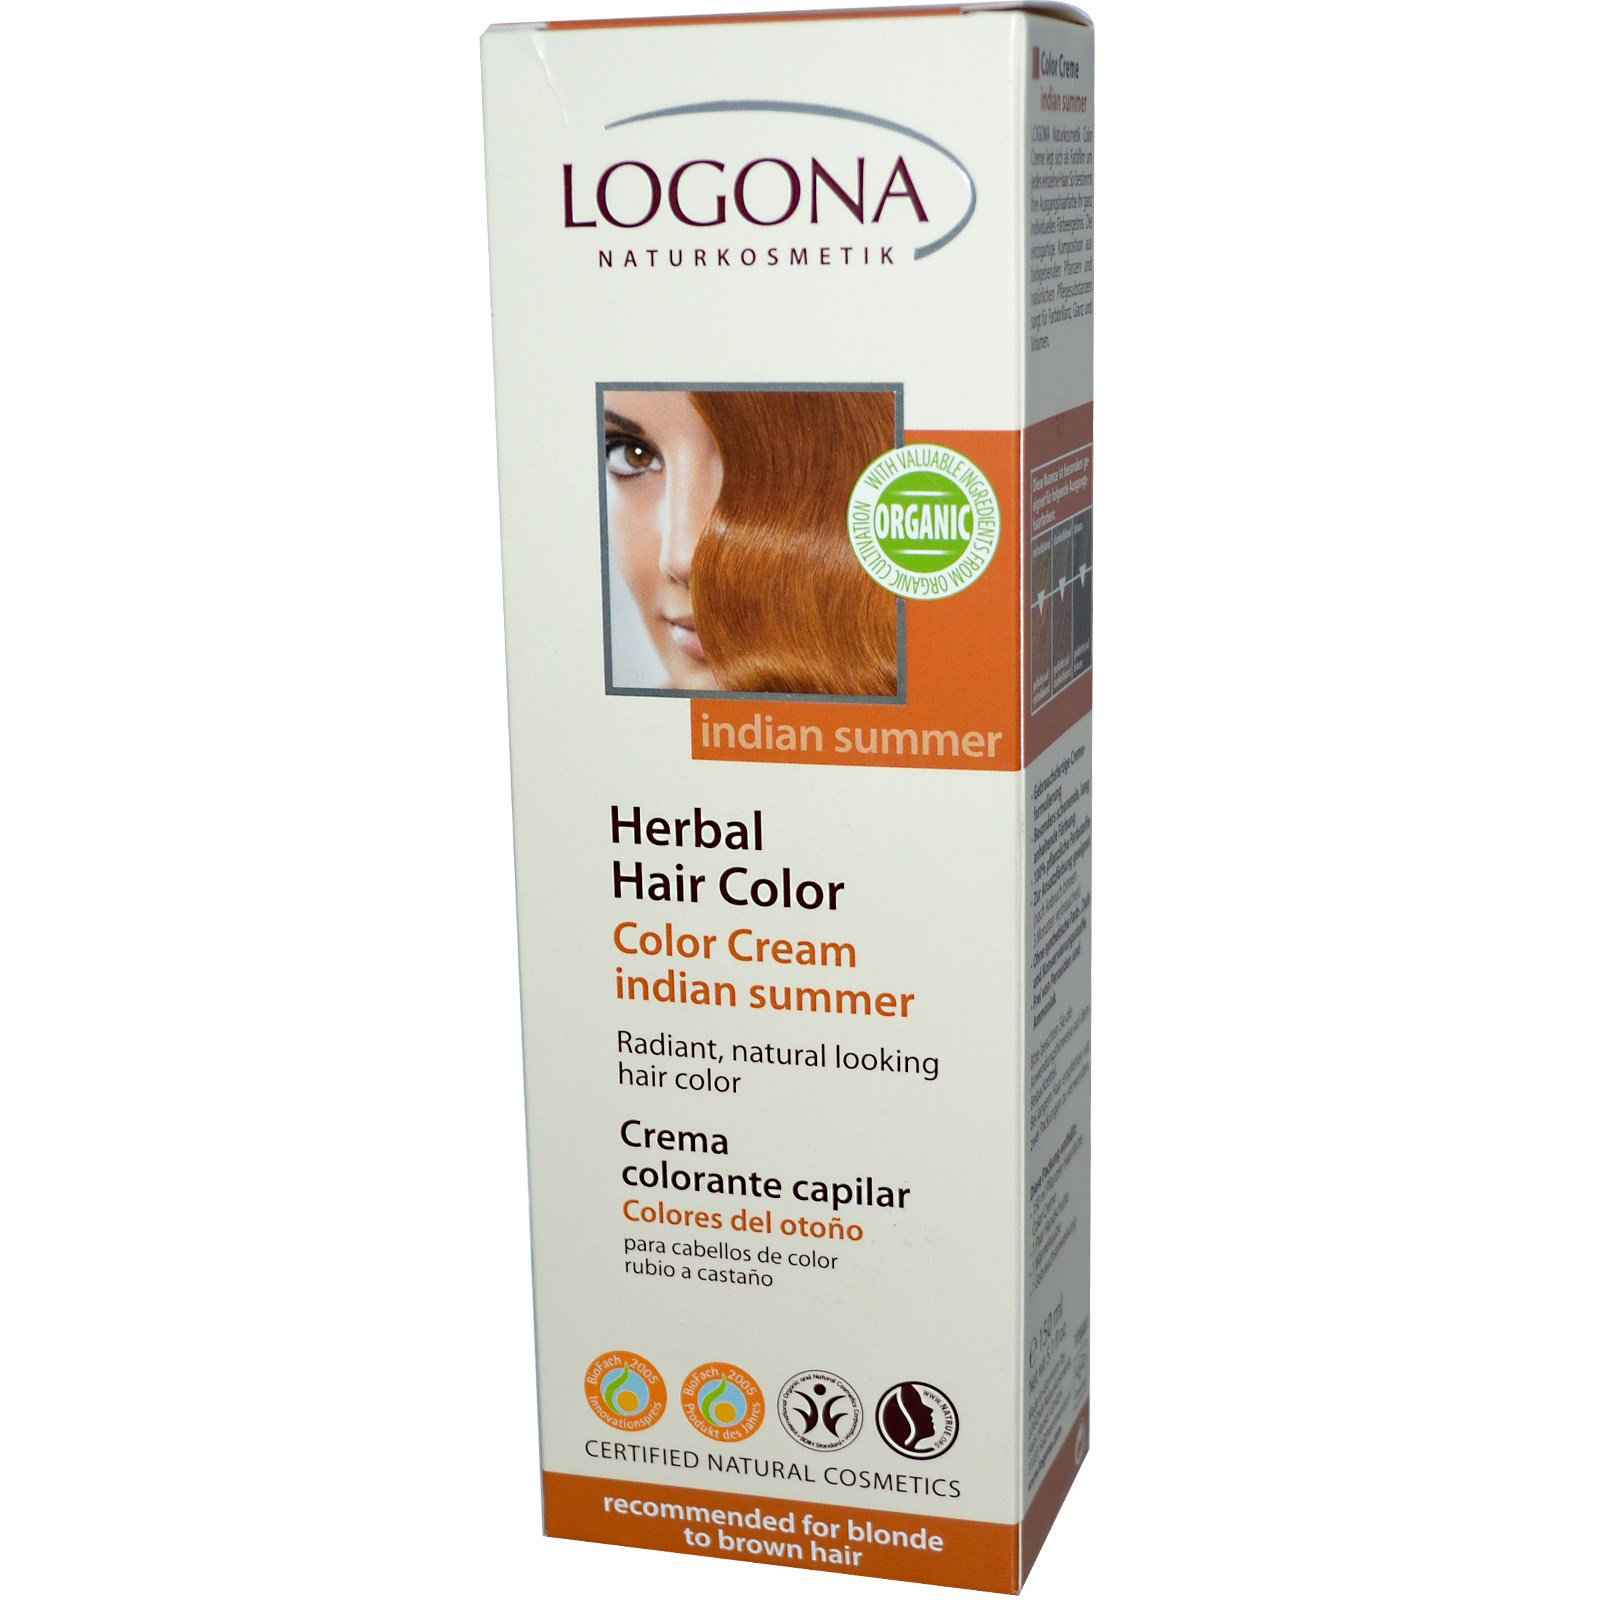 Logona Naturkosmetik Herbal Hair Color Cream Indian Summer 51 Fl 